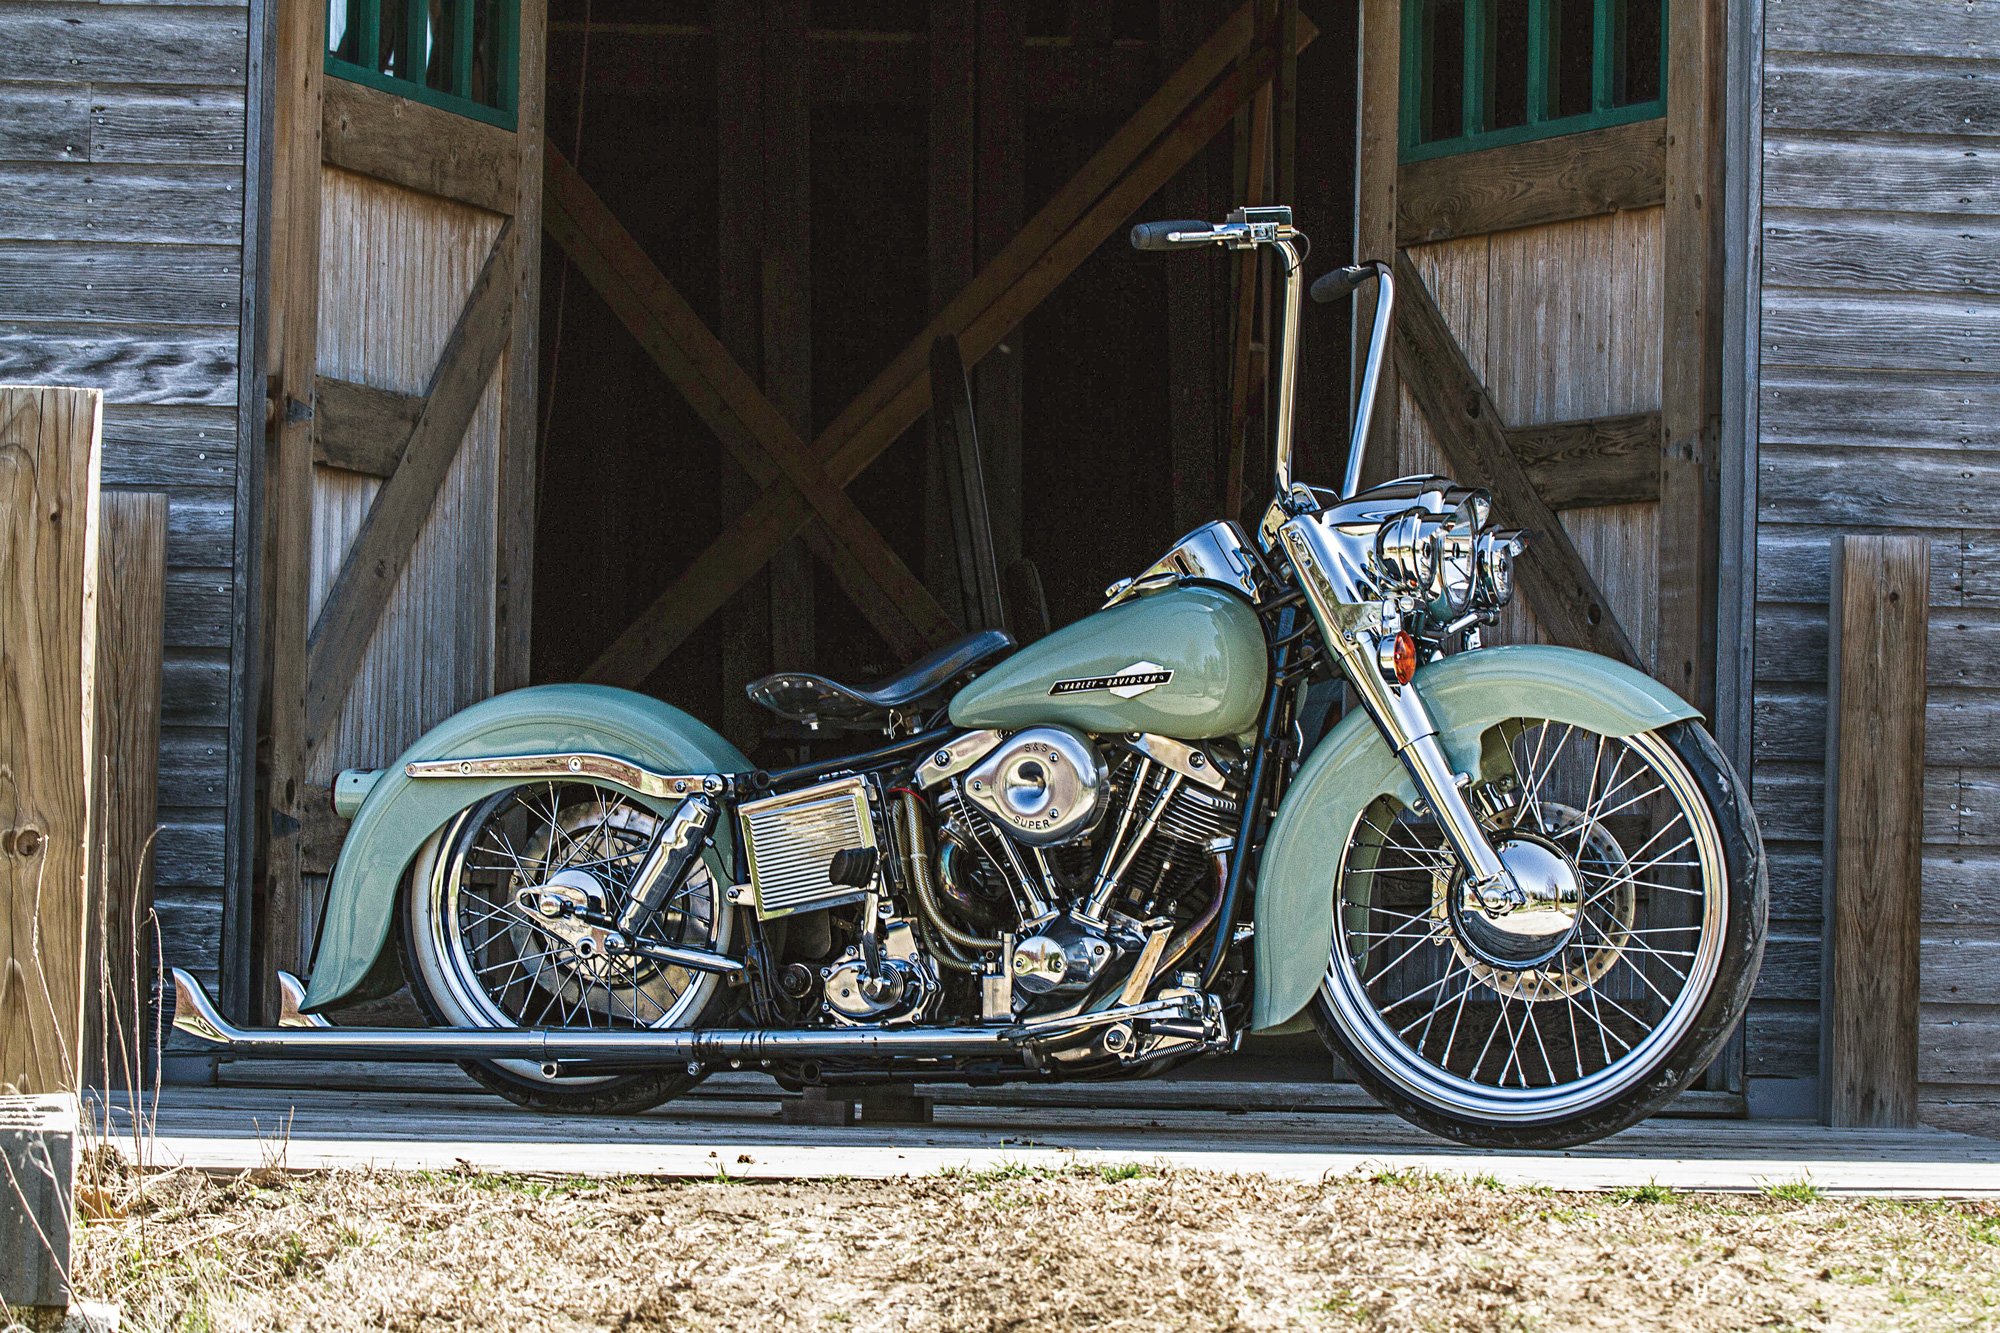 Hot Bike Magazine on Twitter: "Custom 1975 Harley-Davidson ...